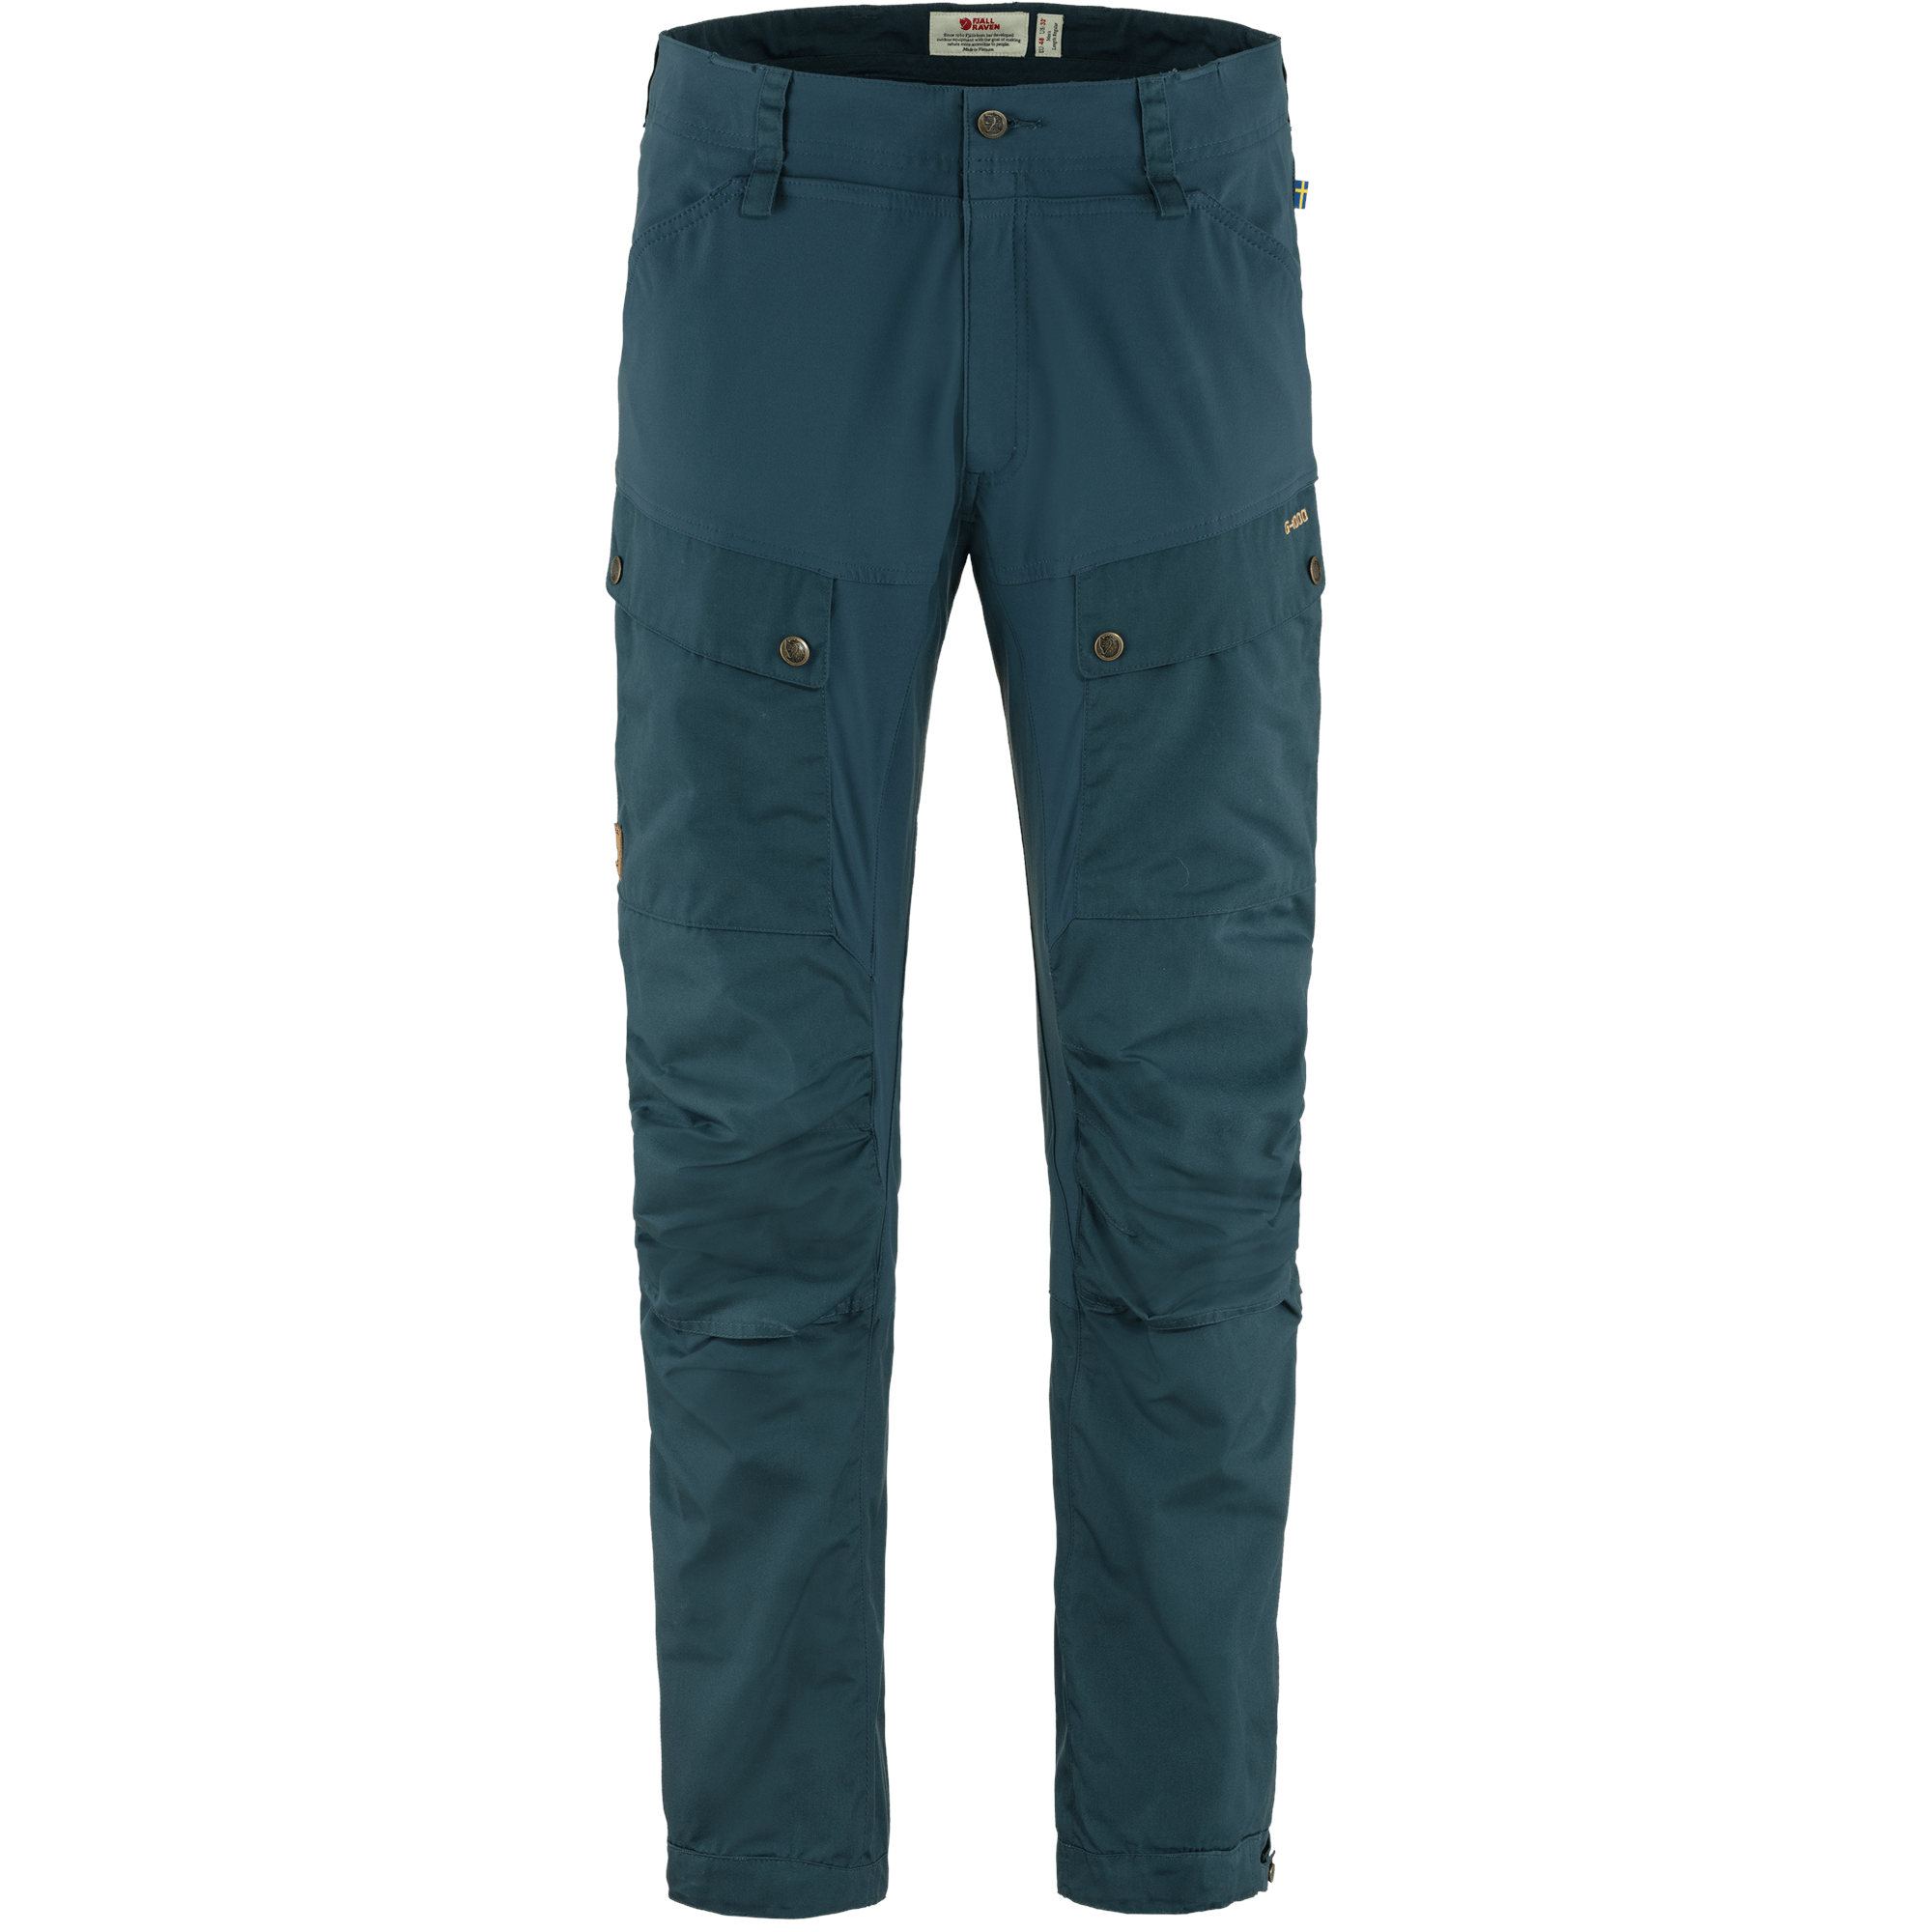 Fjällräven Trousers 48 EU / Mountain Blue-Mountain Blue Fjällräven Keb Trousers Regular Fit M's